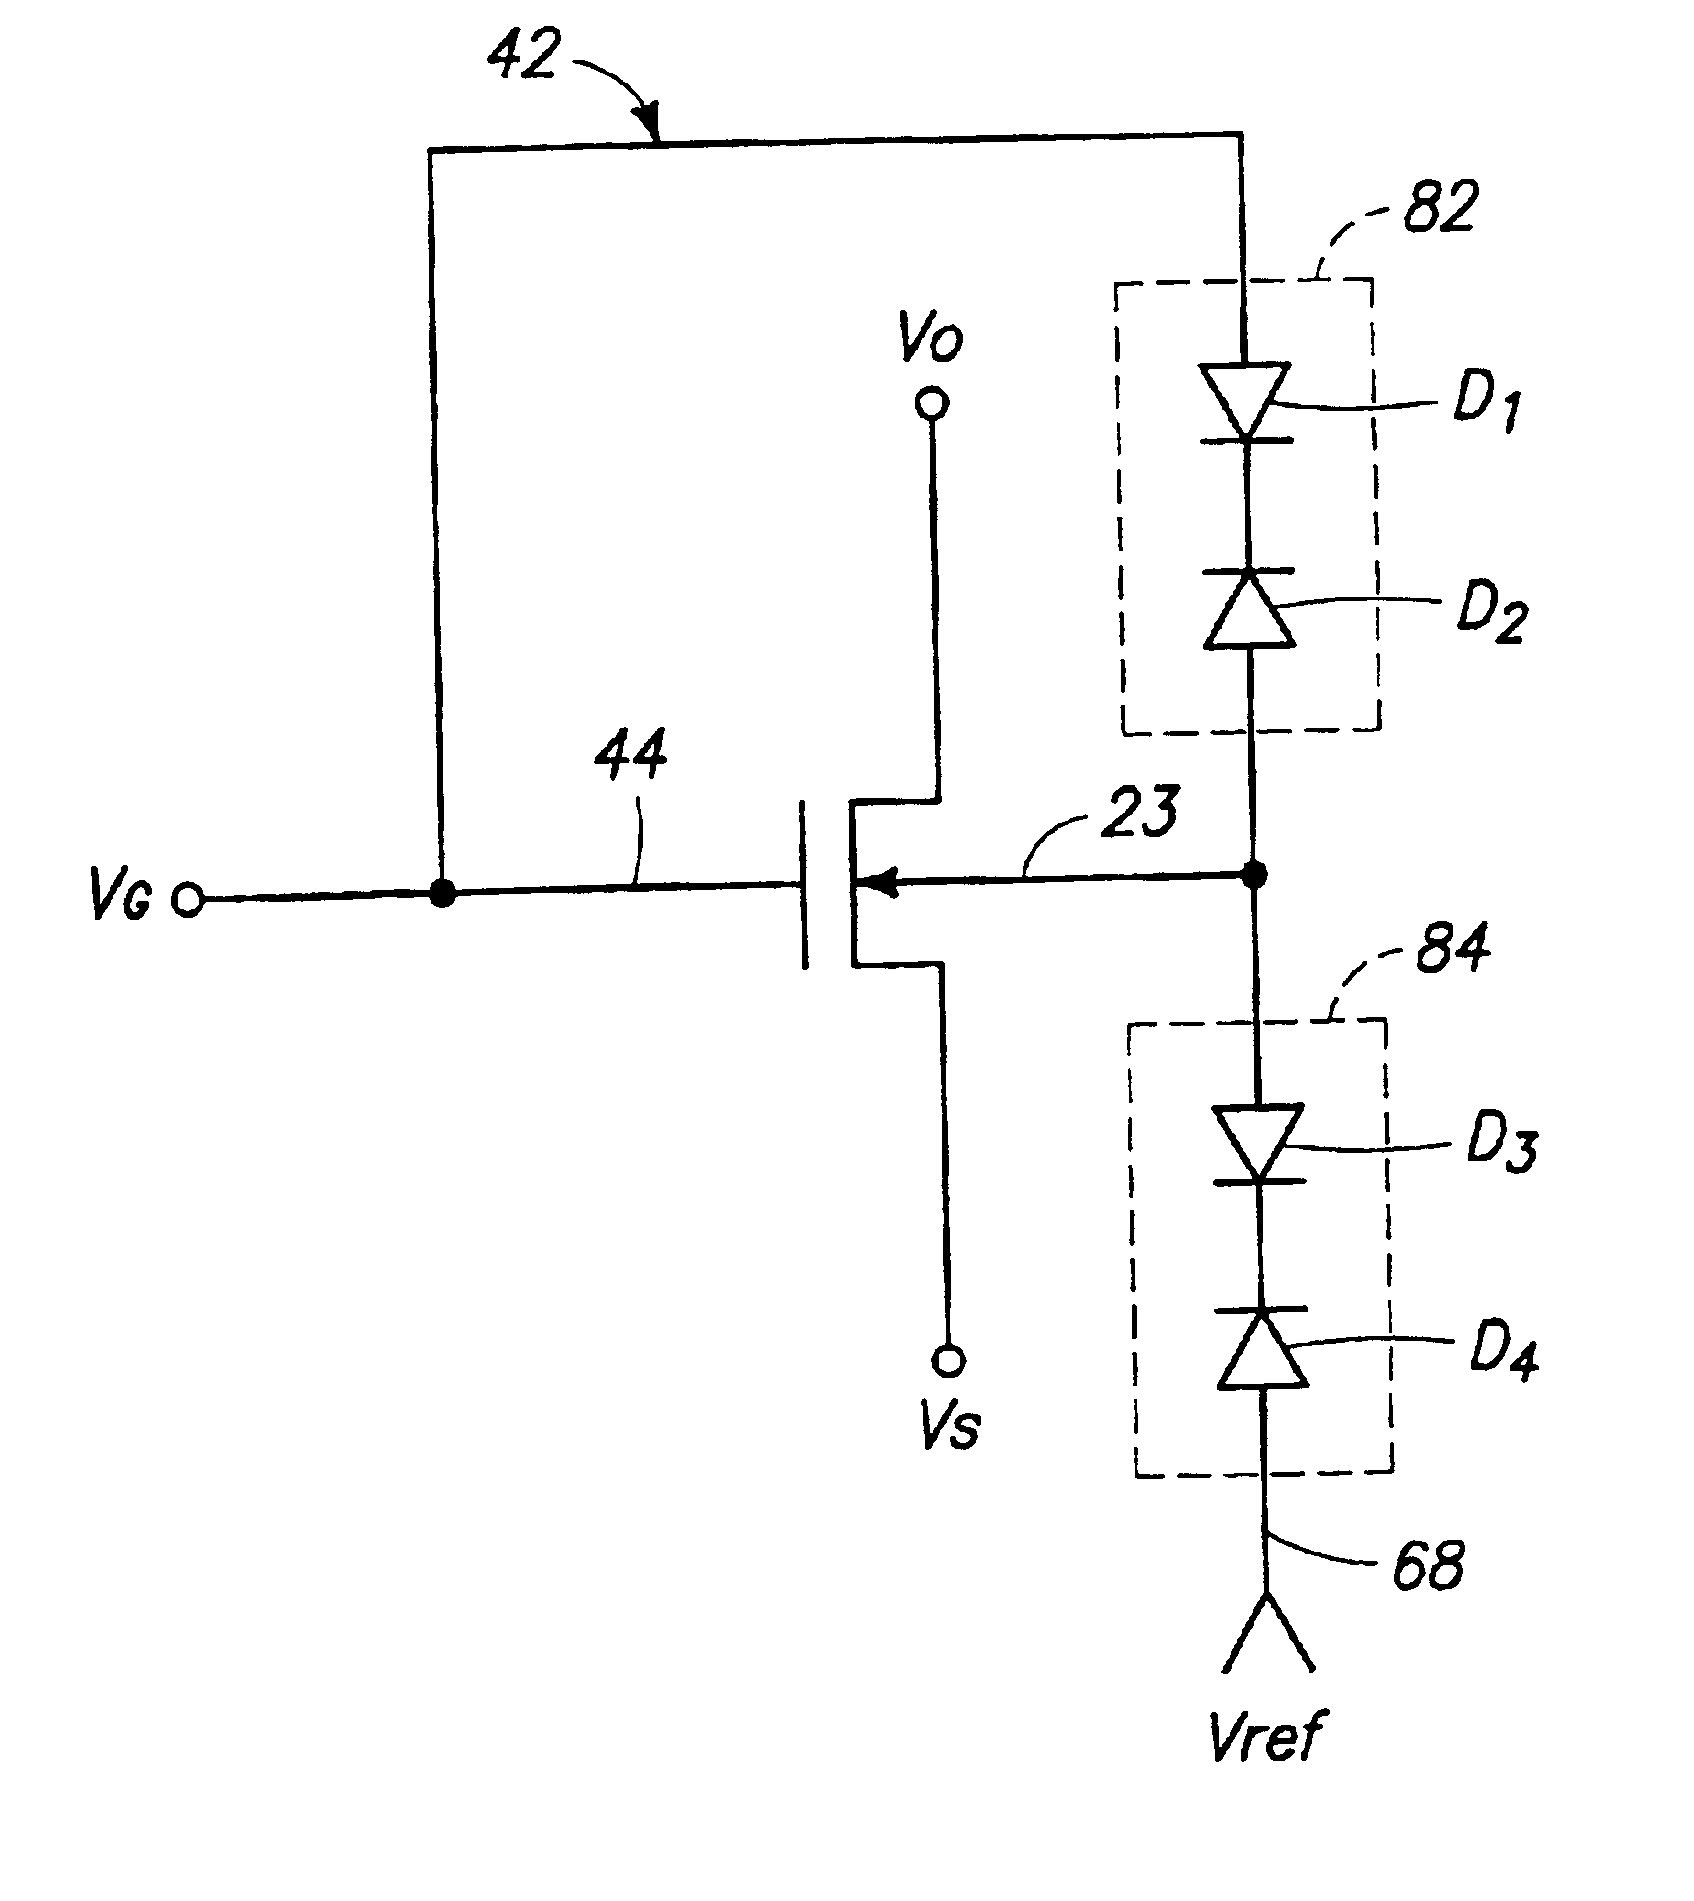 Methods of forming field effect transistors and field effect transistor circuitry